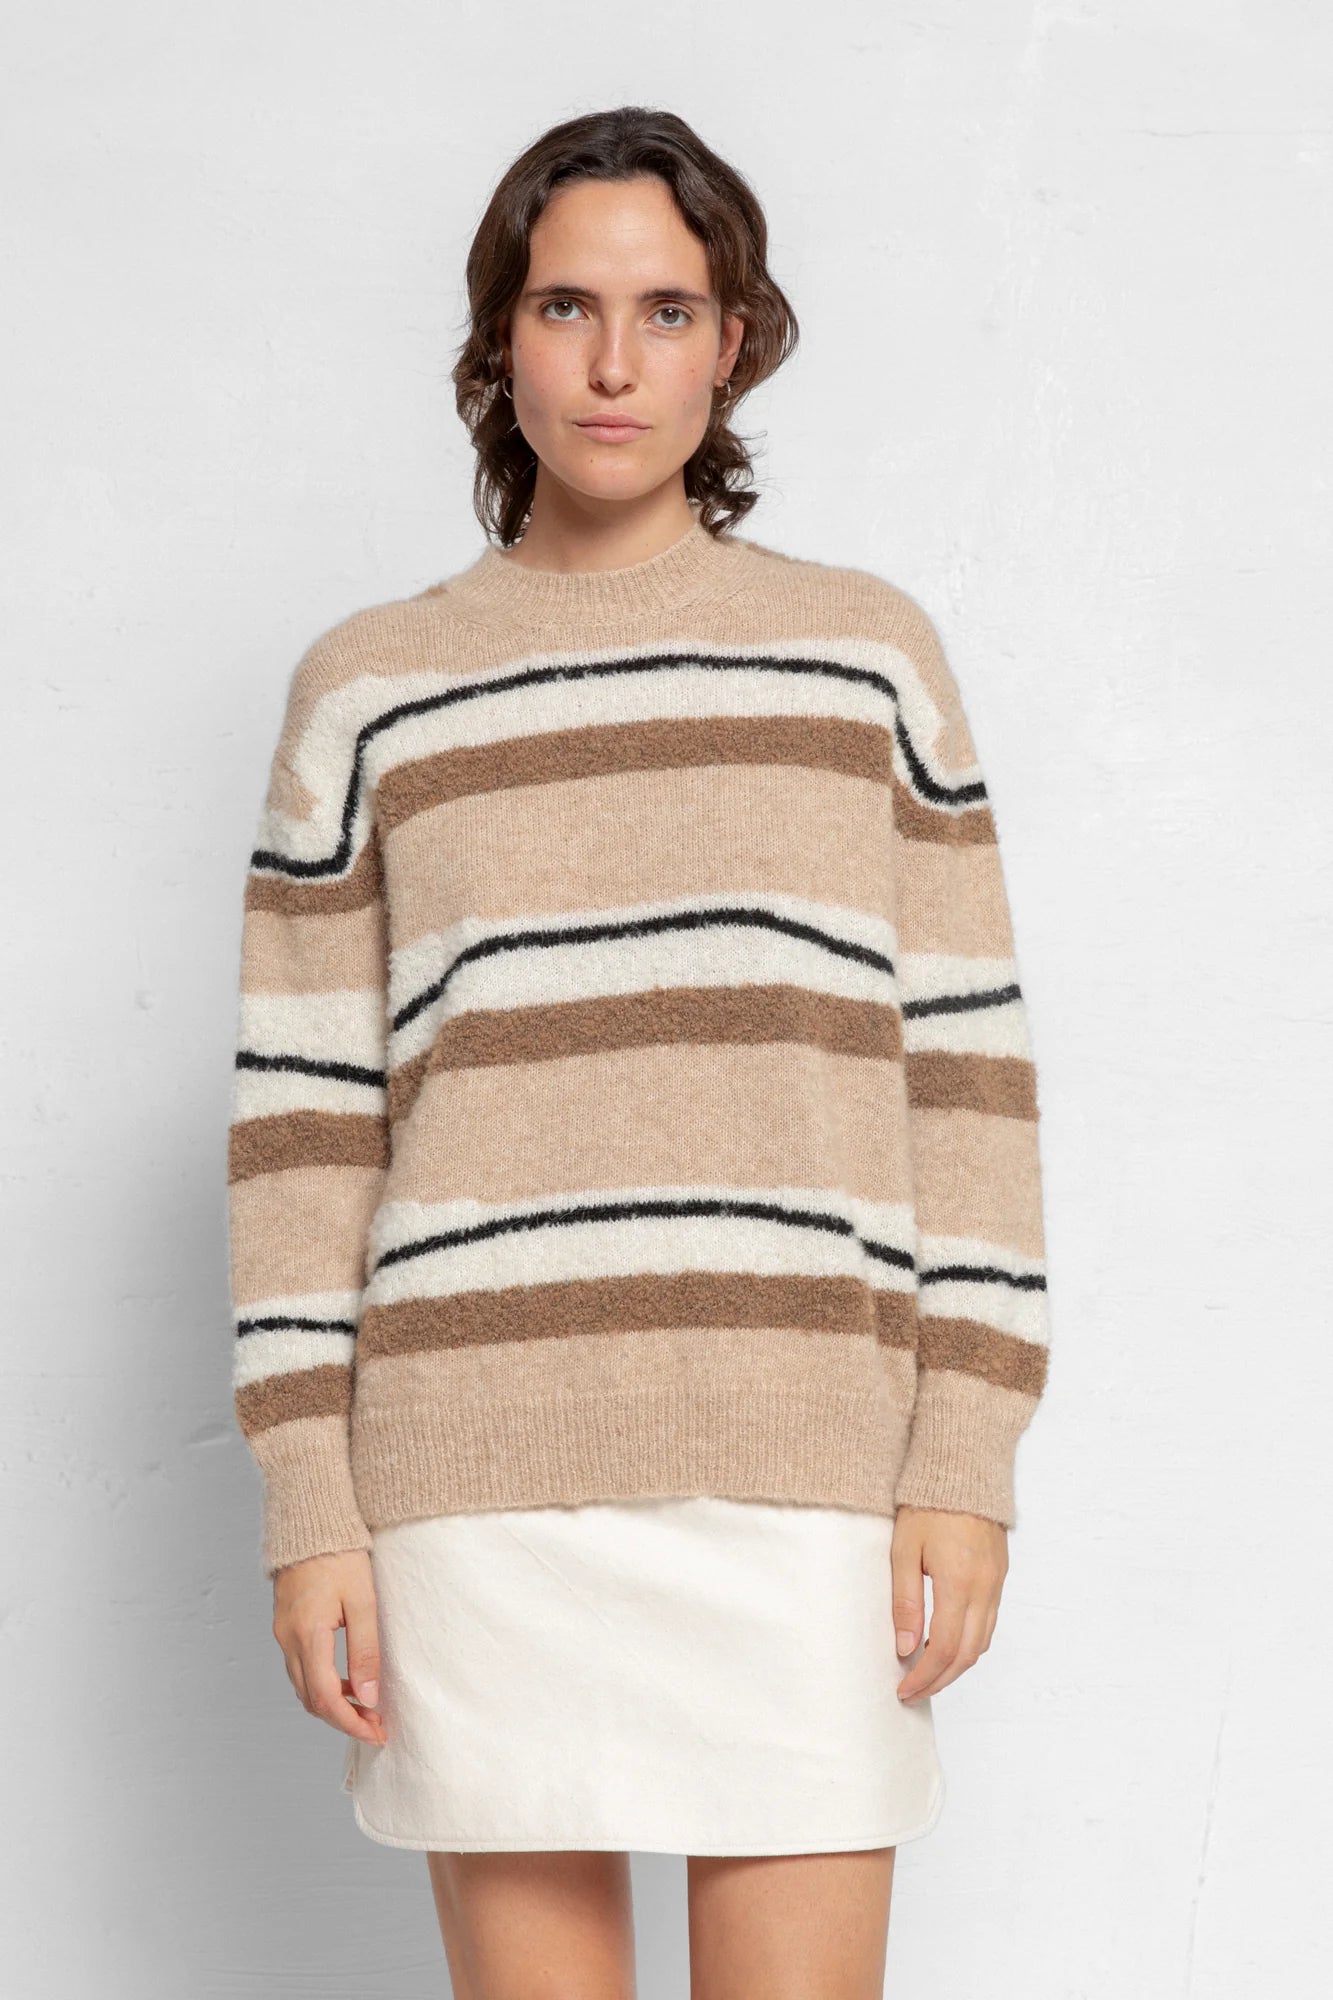 Alan alpaca sweater in light striped